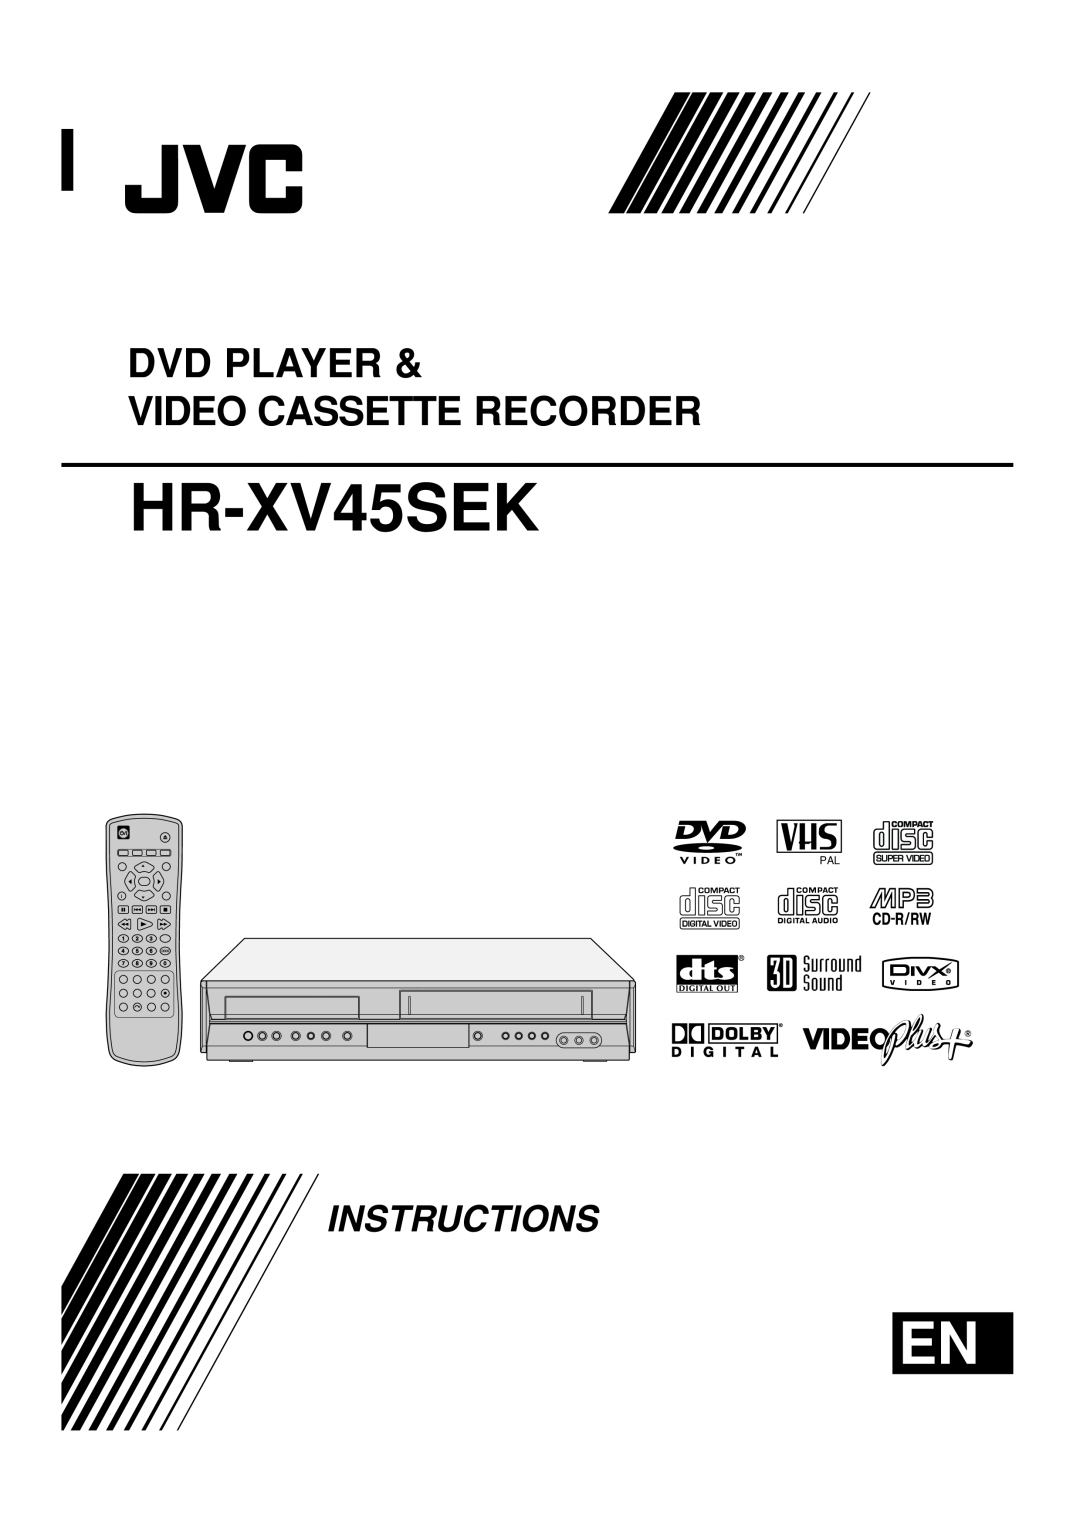 JVC 3834RV0038A manual Dvd Player Video Cassette Recorder, HR-XV45SEK, Instructions 